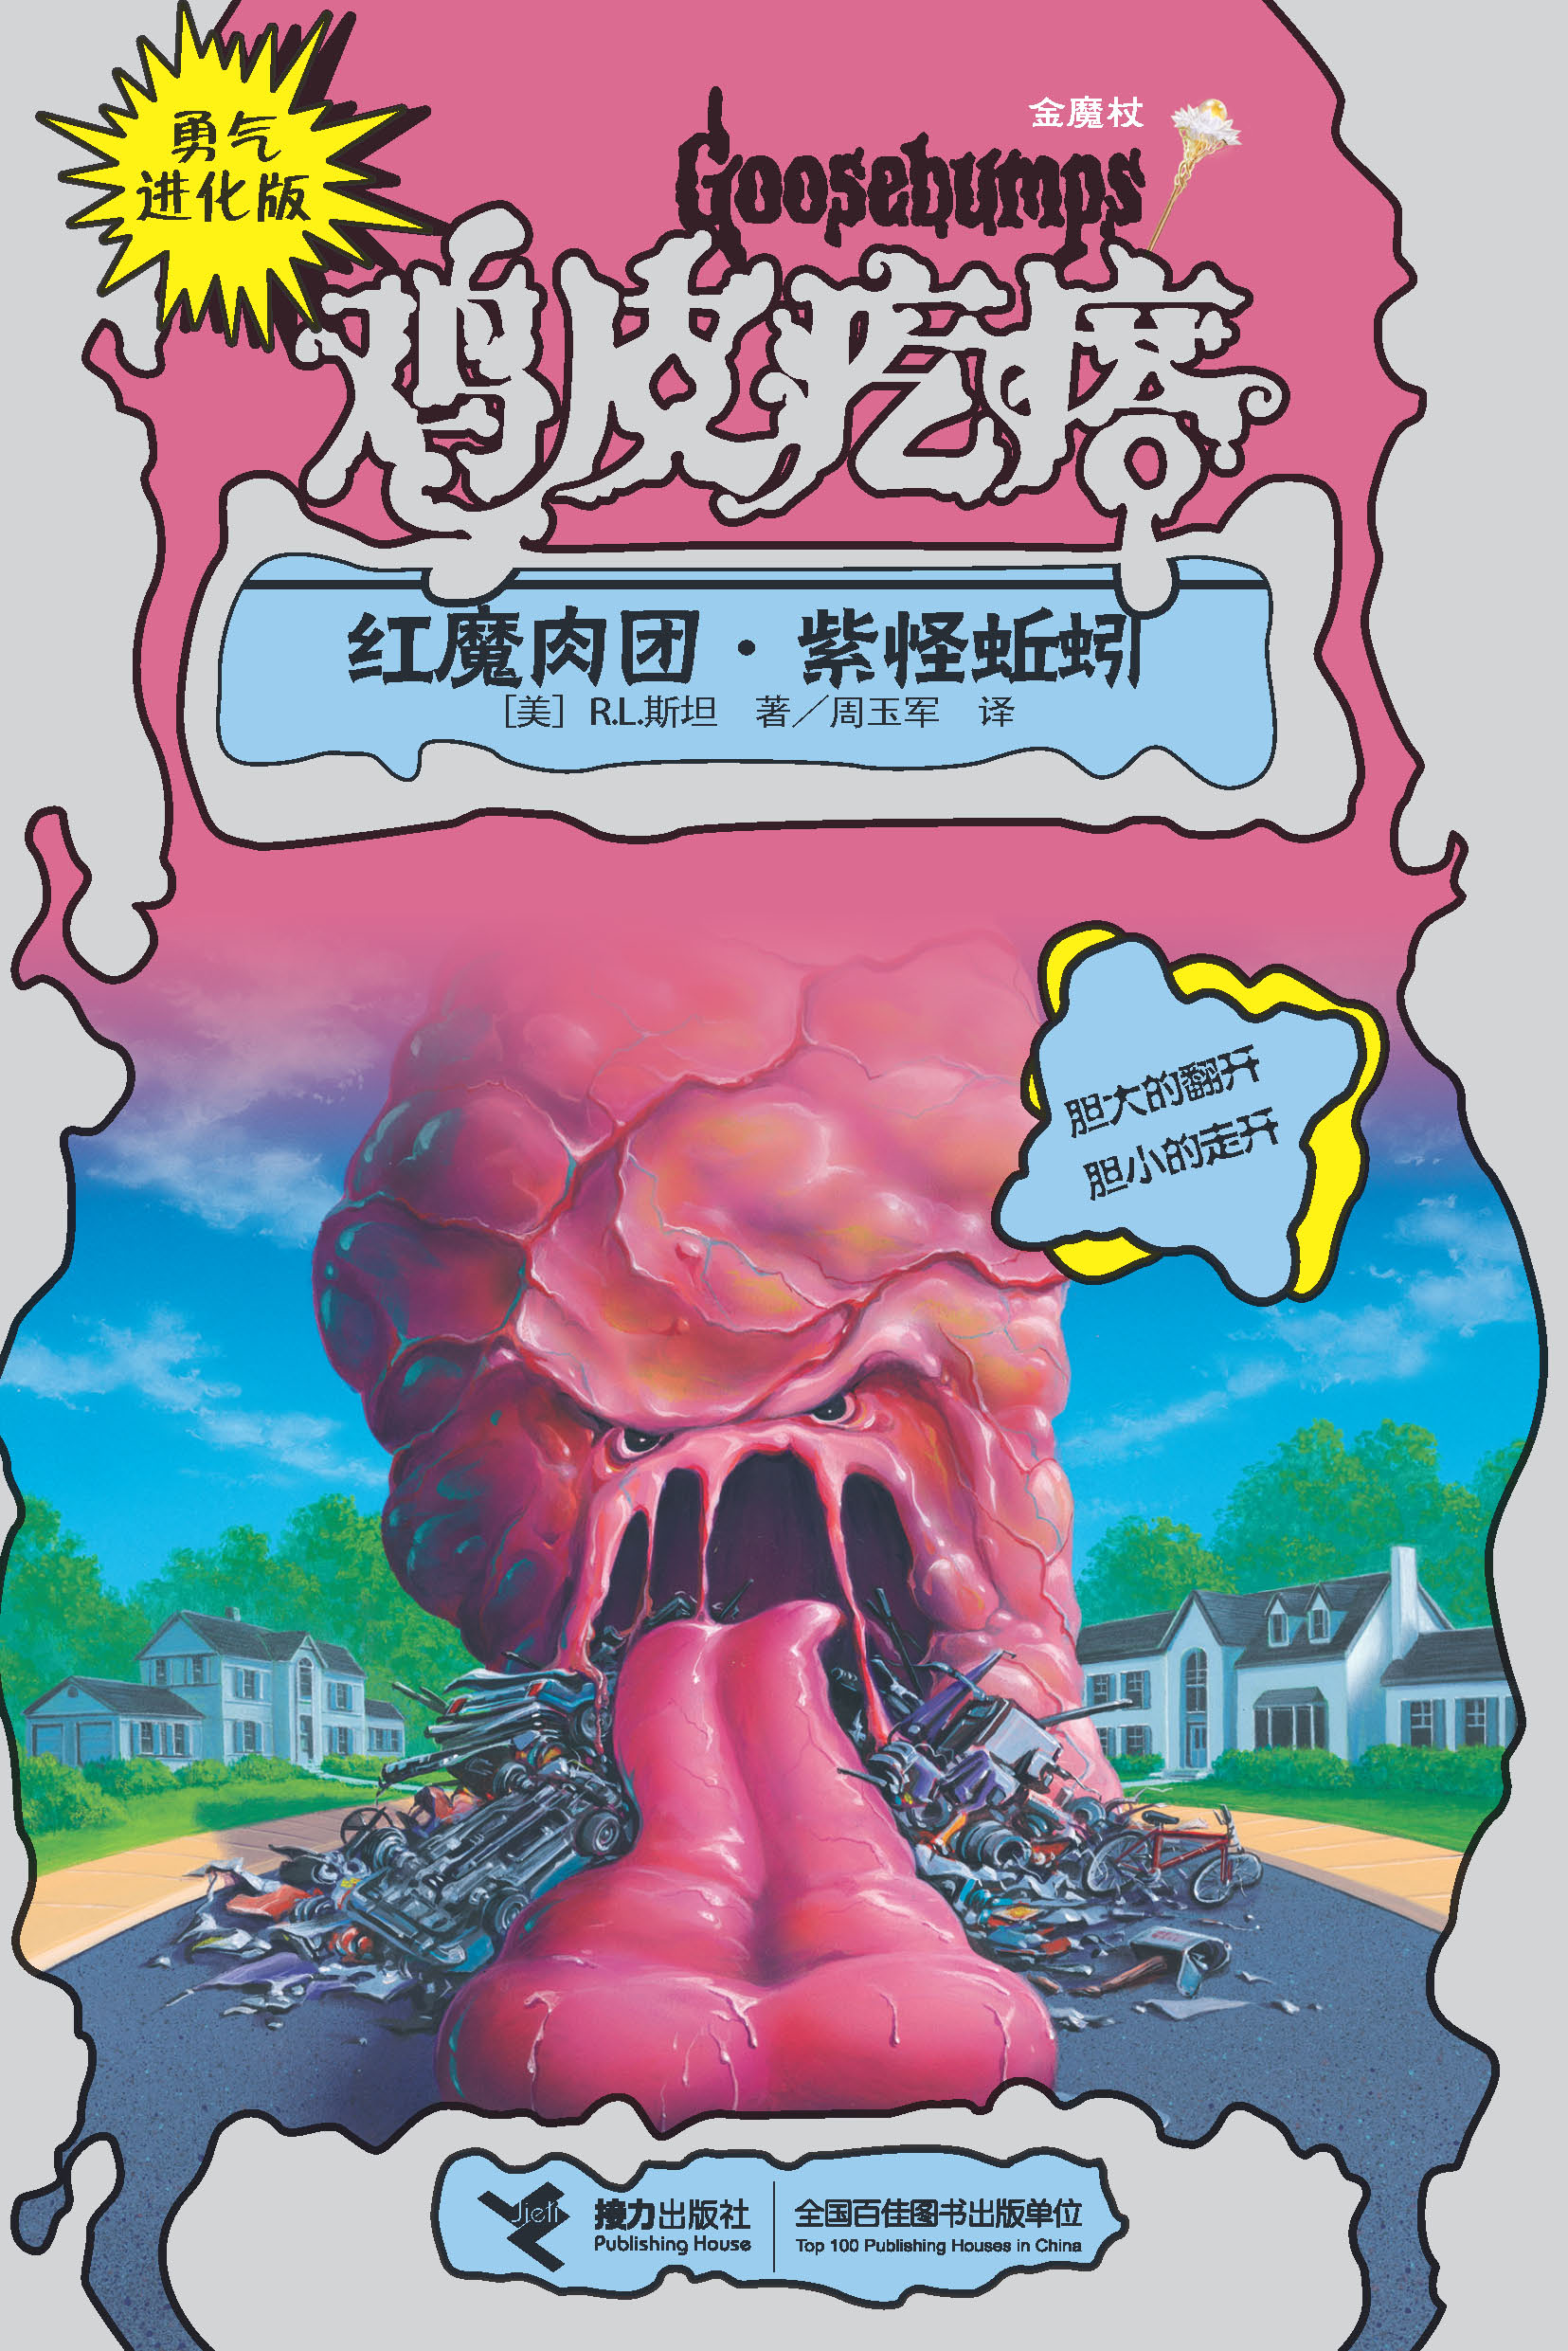 The Blob That Ate Everyone | Goosebumps Wiki | Fandom